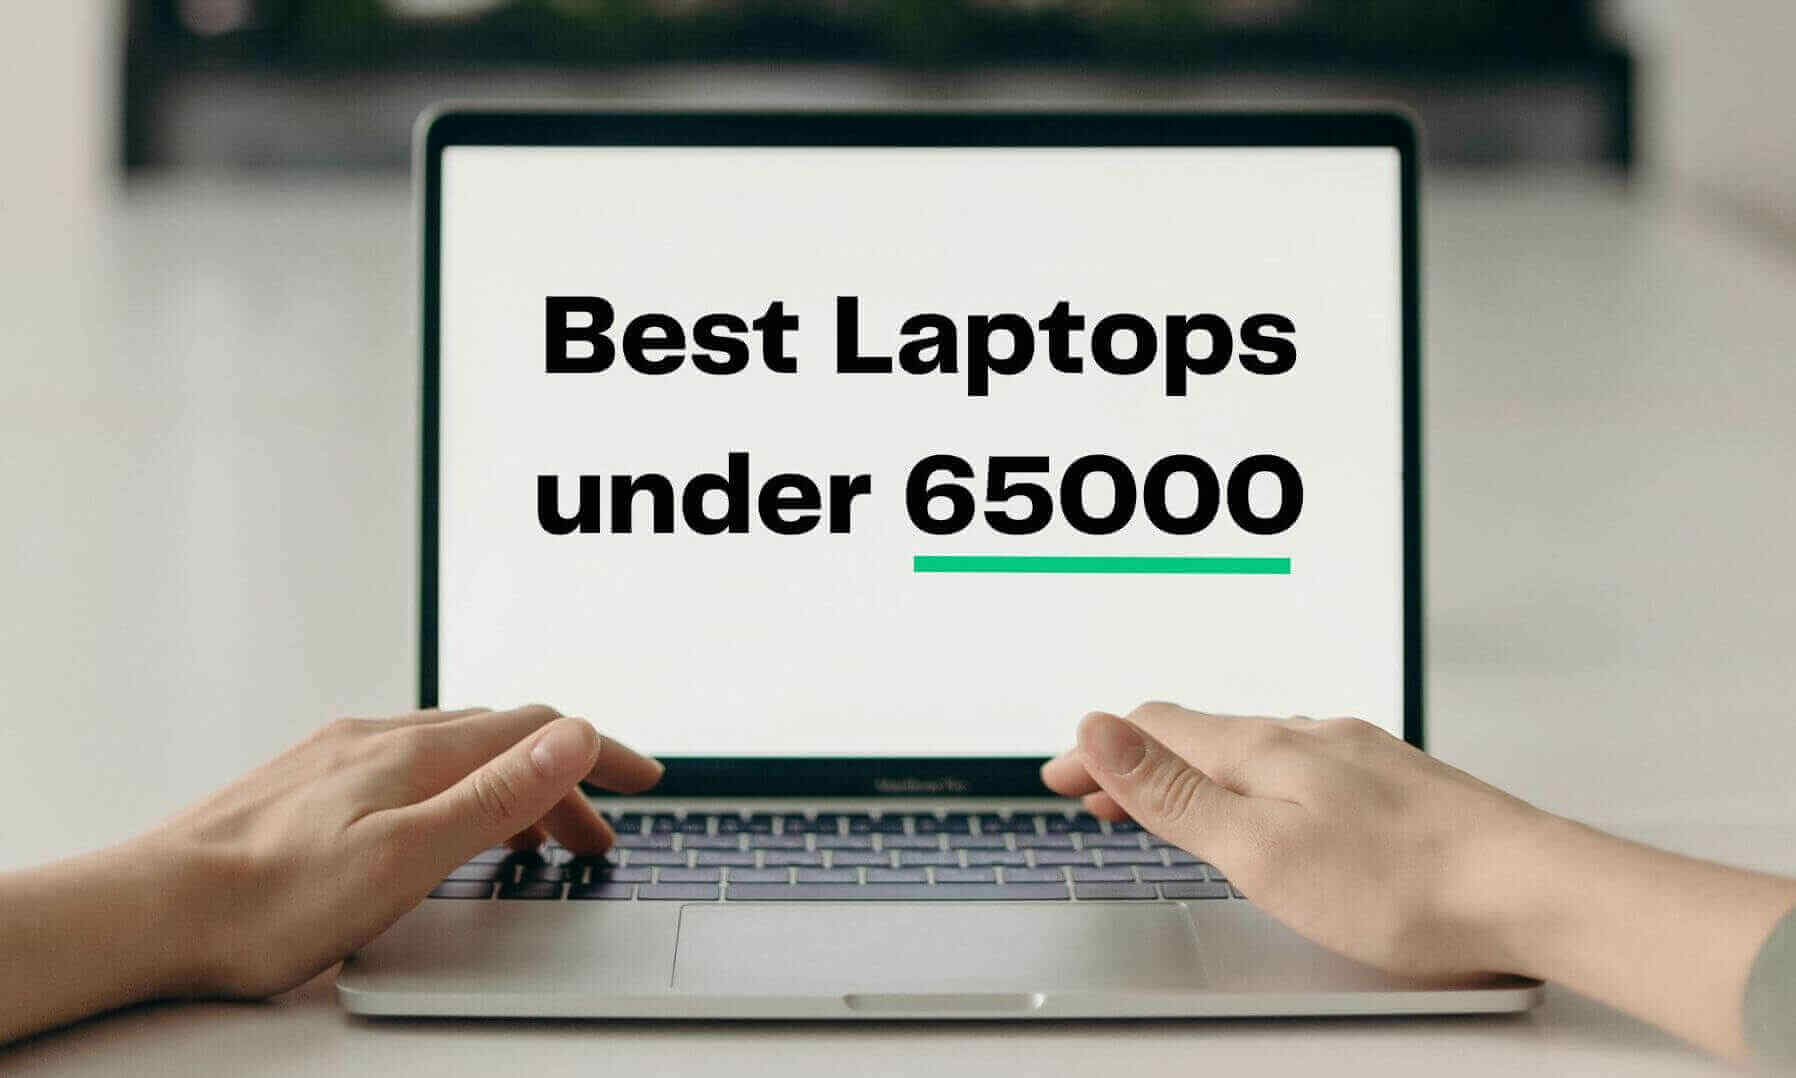 Best Laptops under 65000 in India